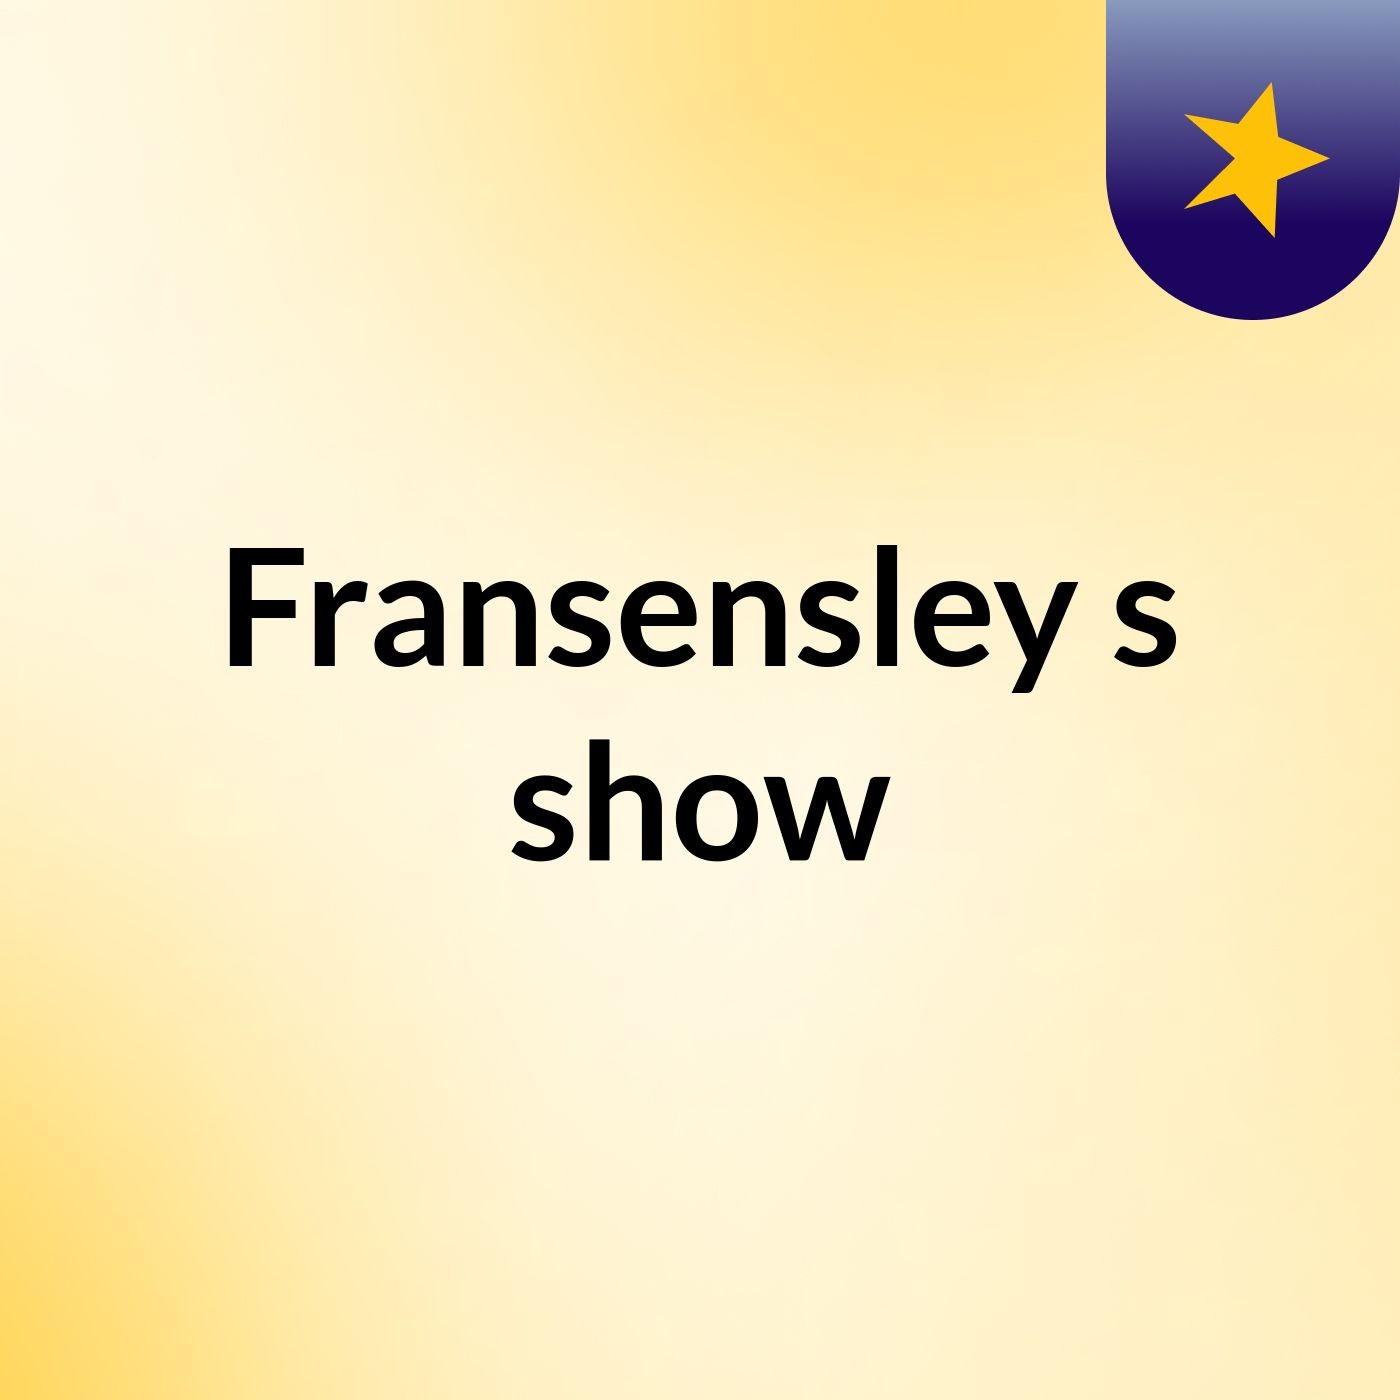 Fransensley's show